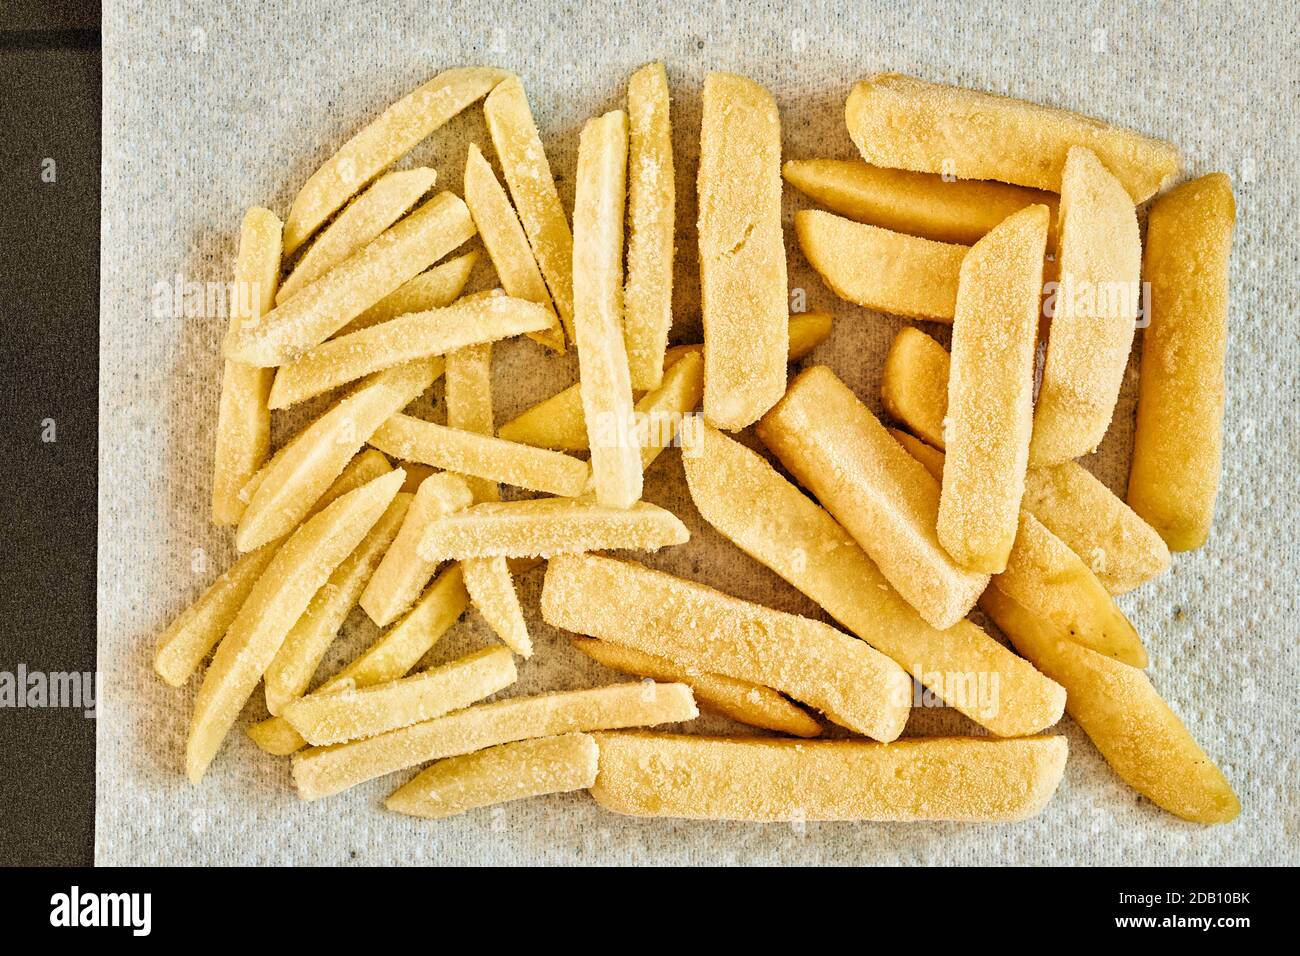 Patatas fritas congeladas fotografías e imágenes de alta resolución - Alamy